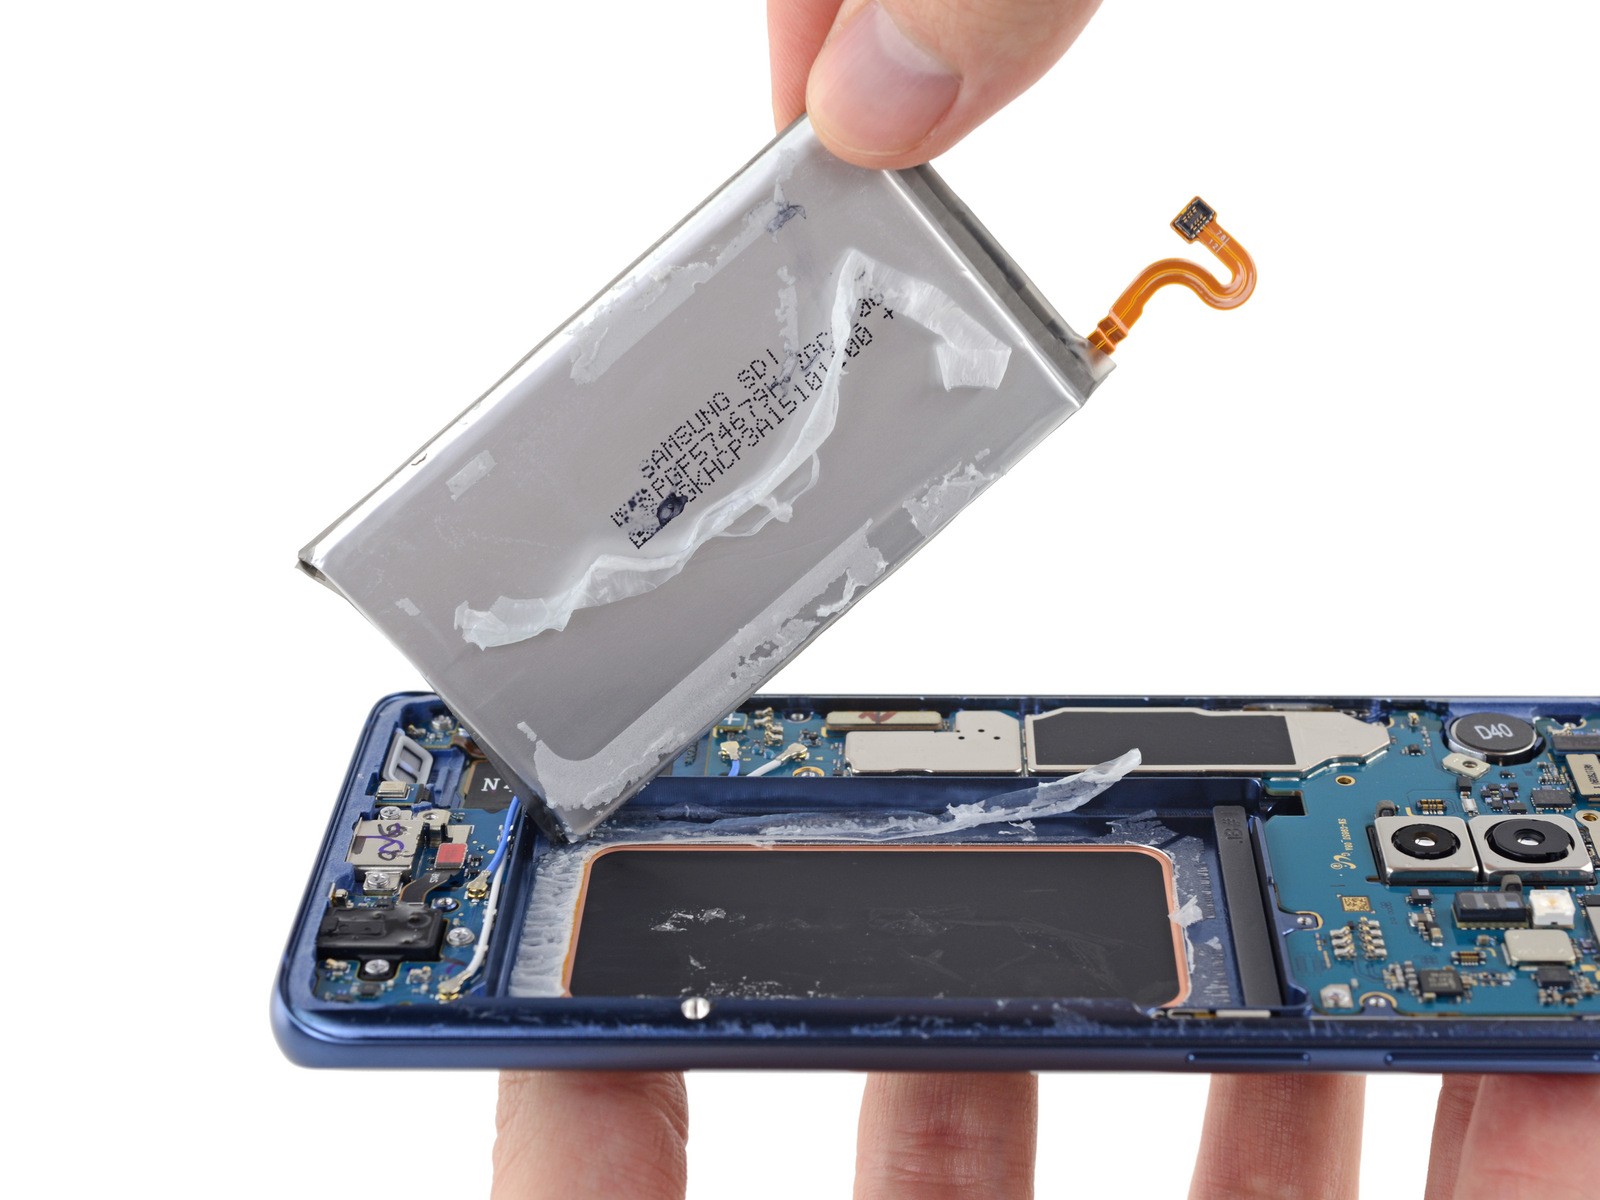 Аккумулятор Для Samsung Galaxy S9